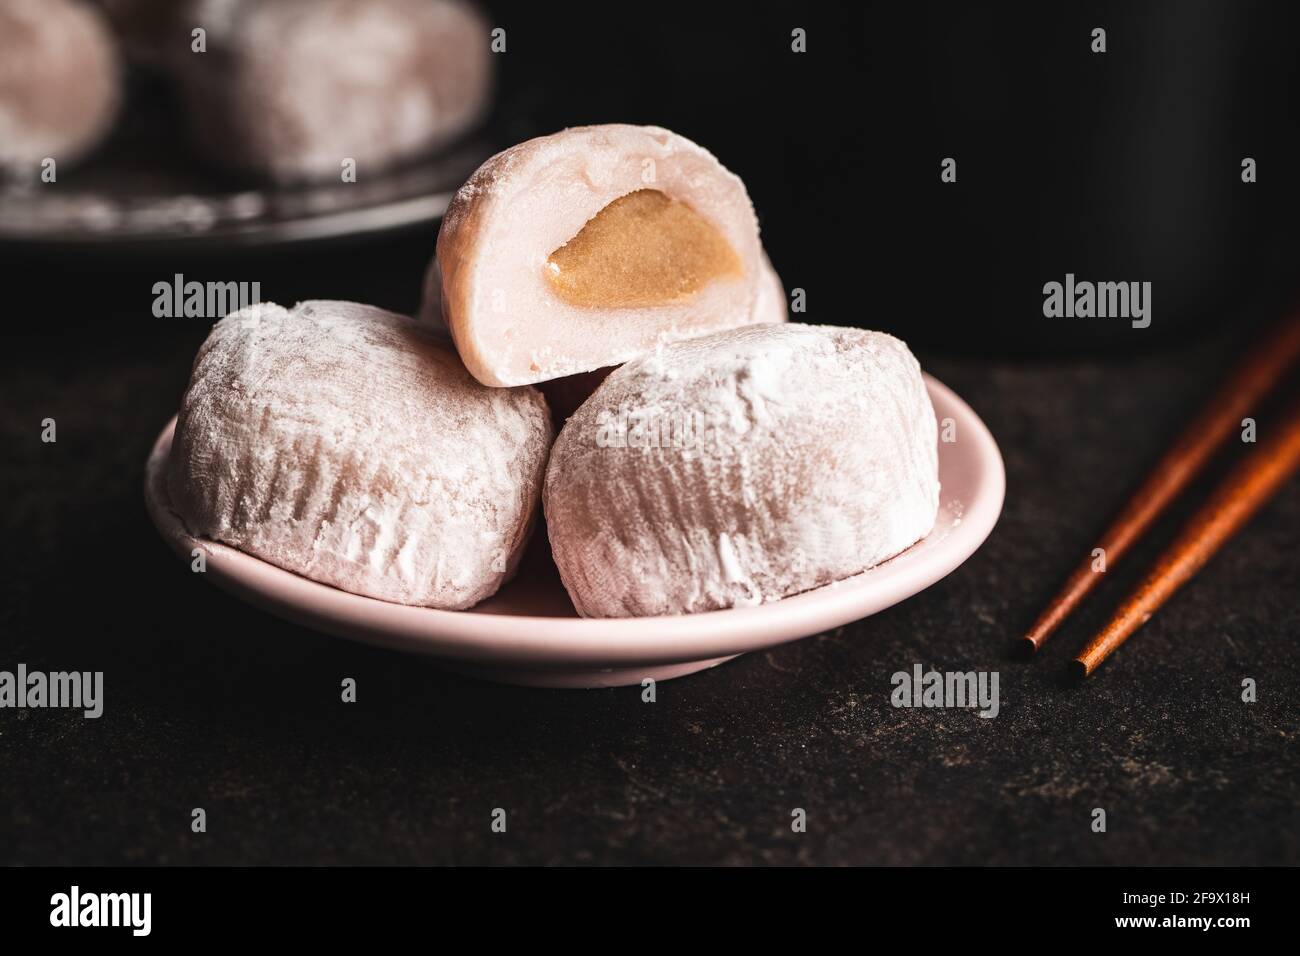 Sweet japanese mochi dessert on plate. Stock Photo